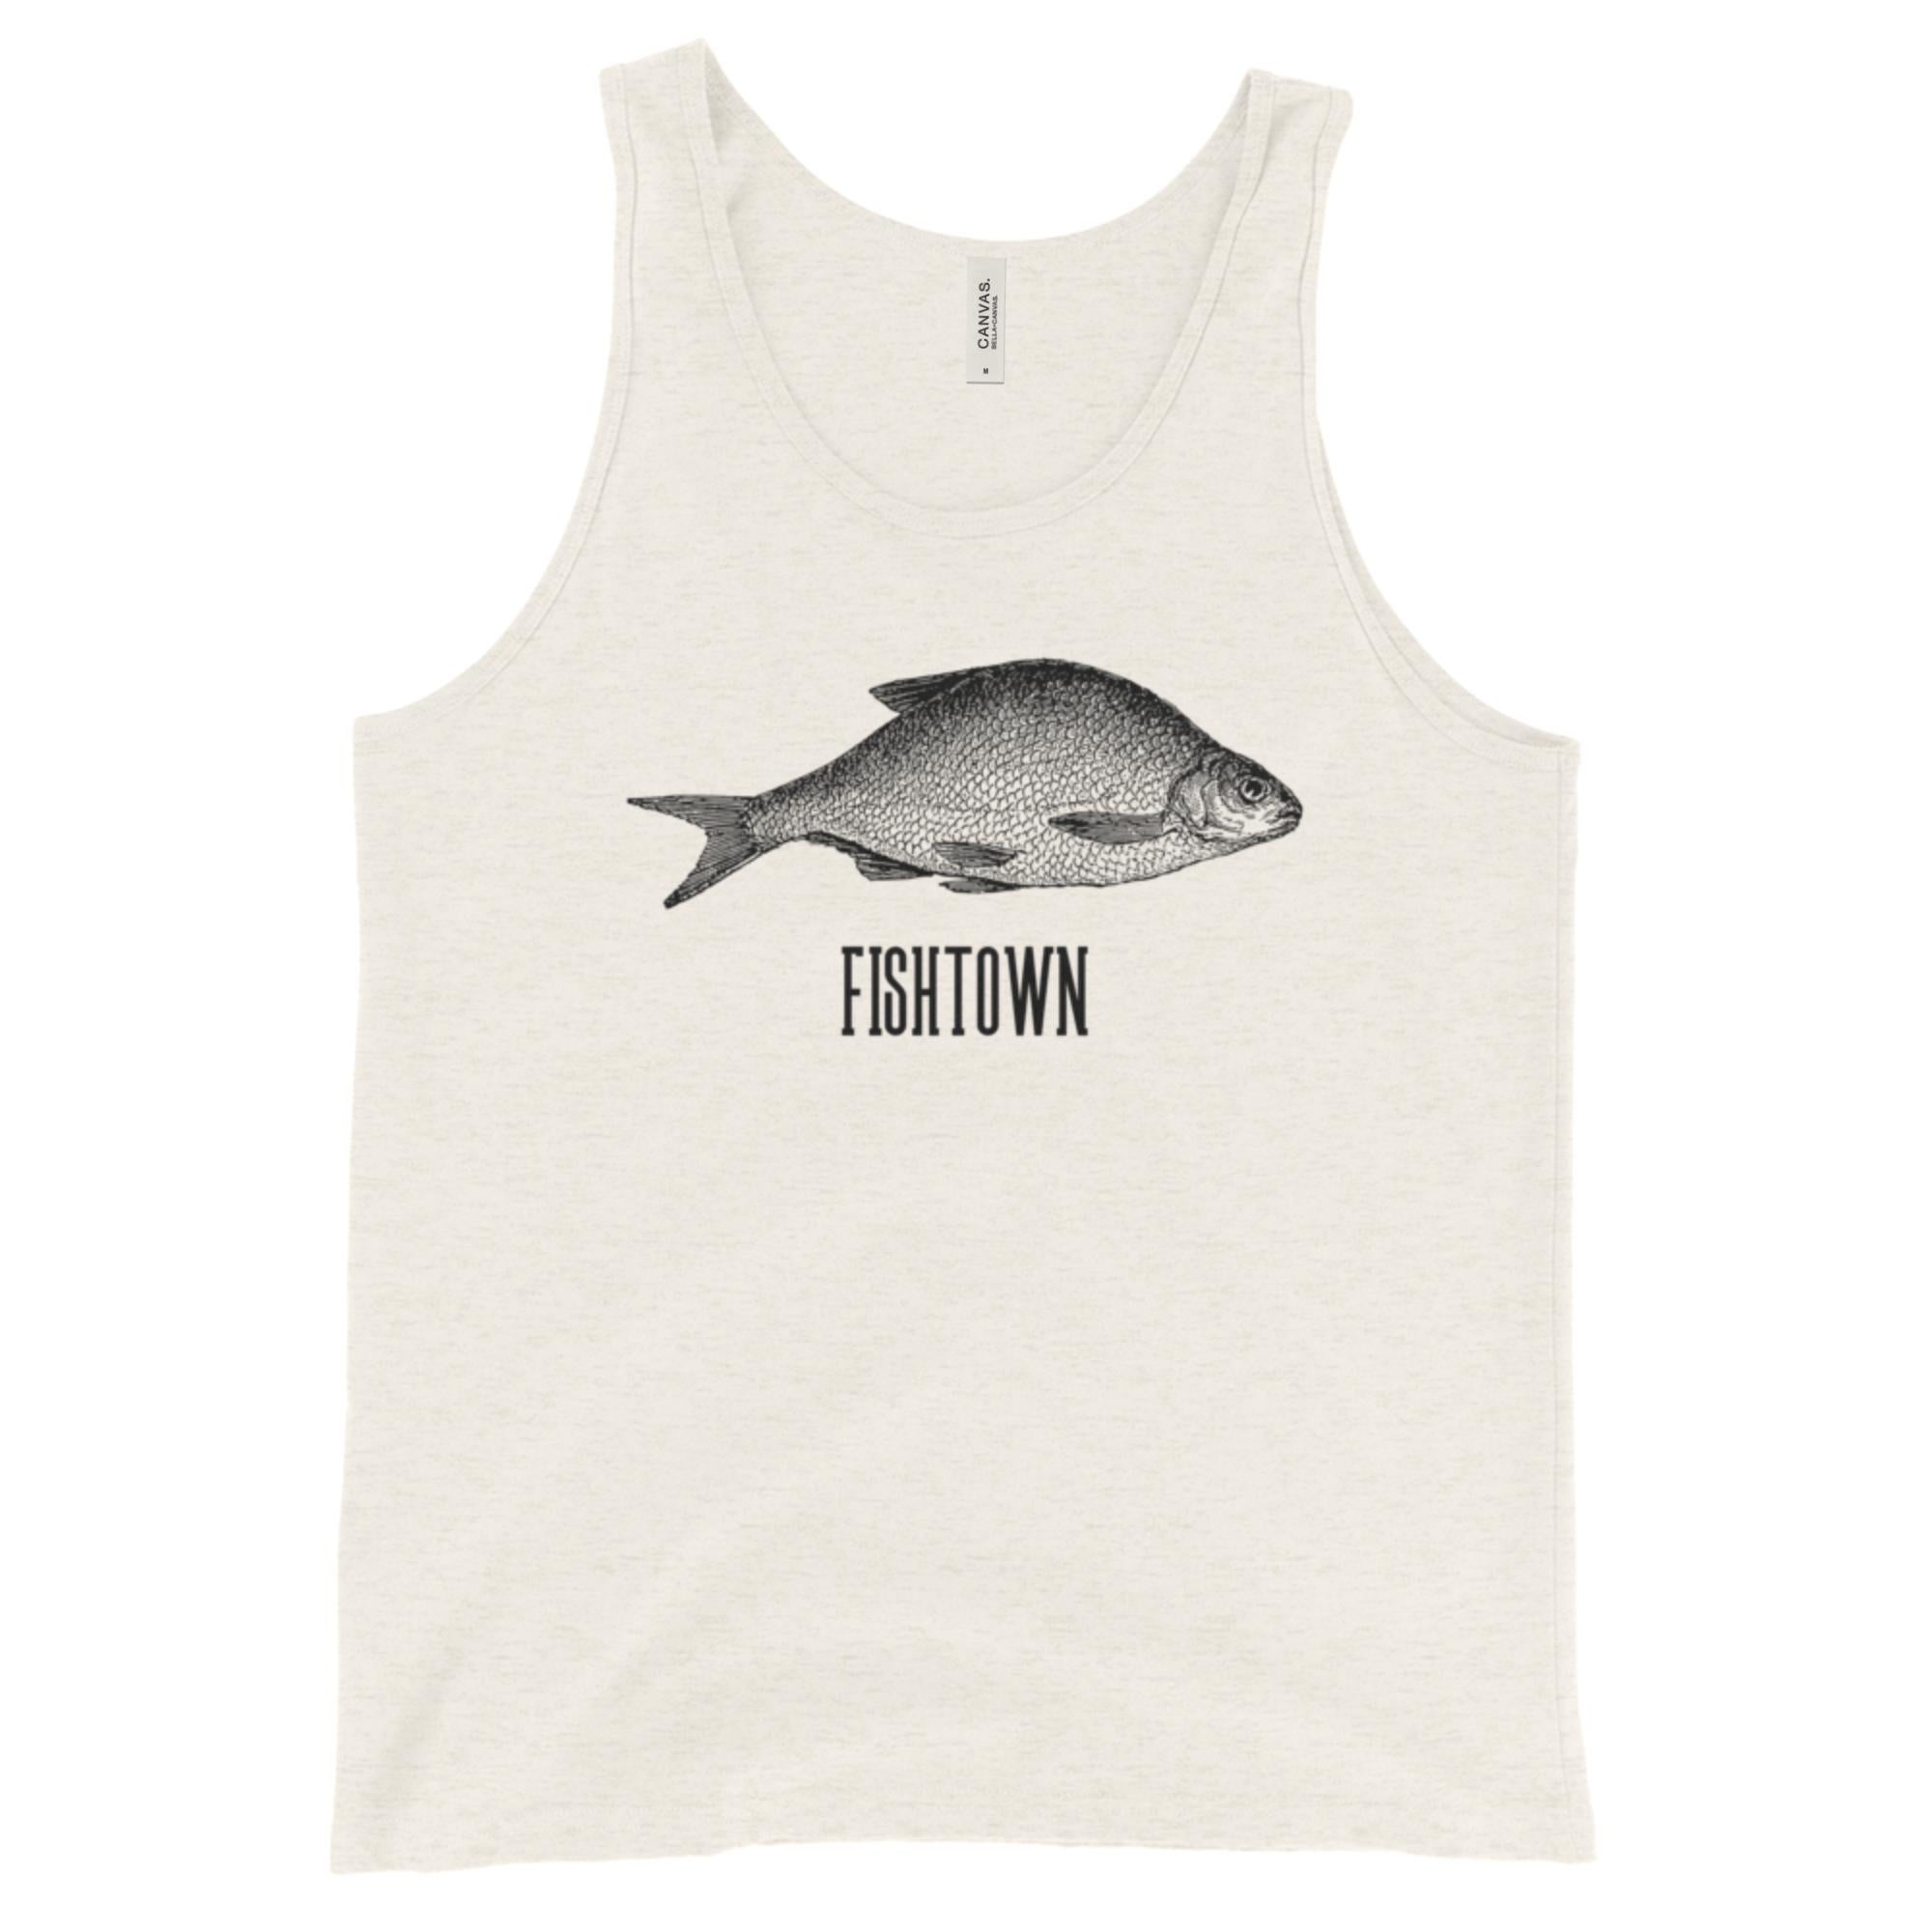 "Fishtown" Tank Top